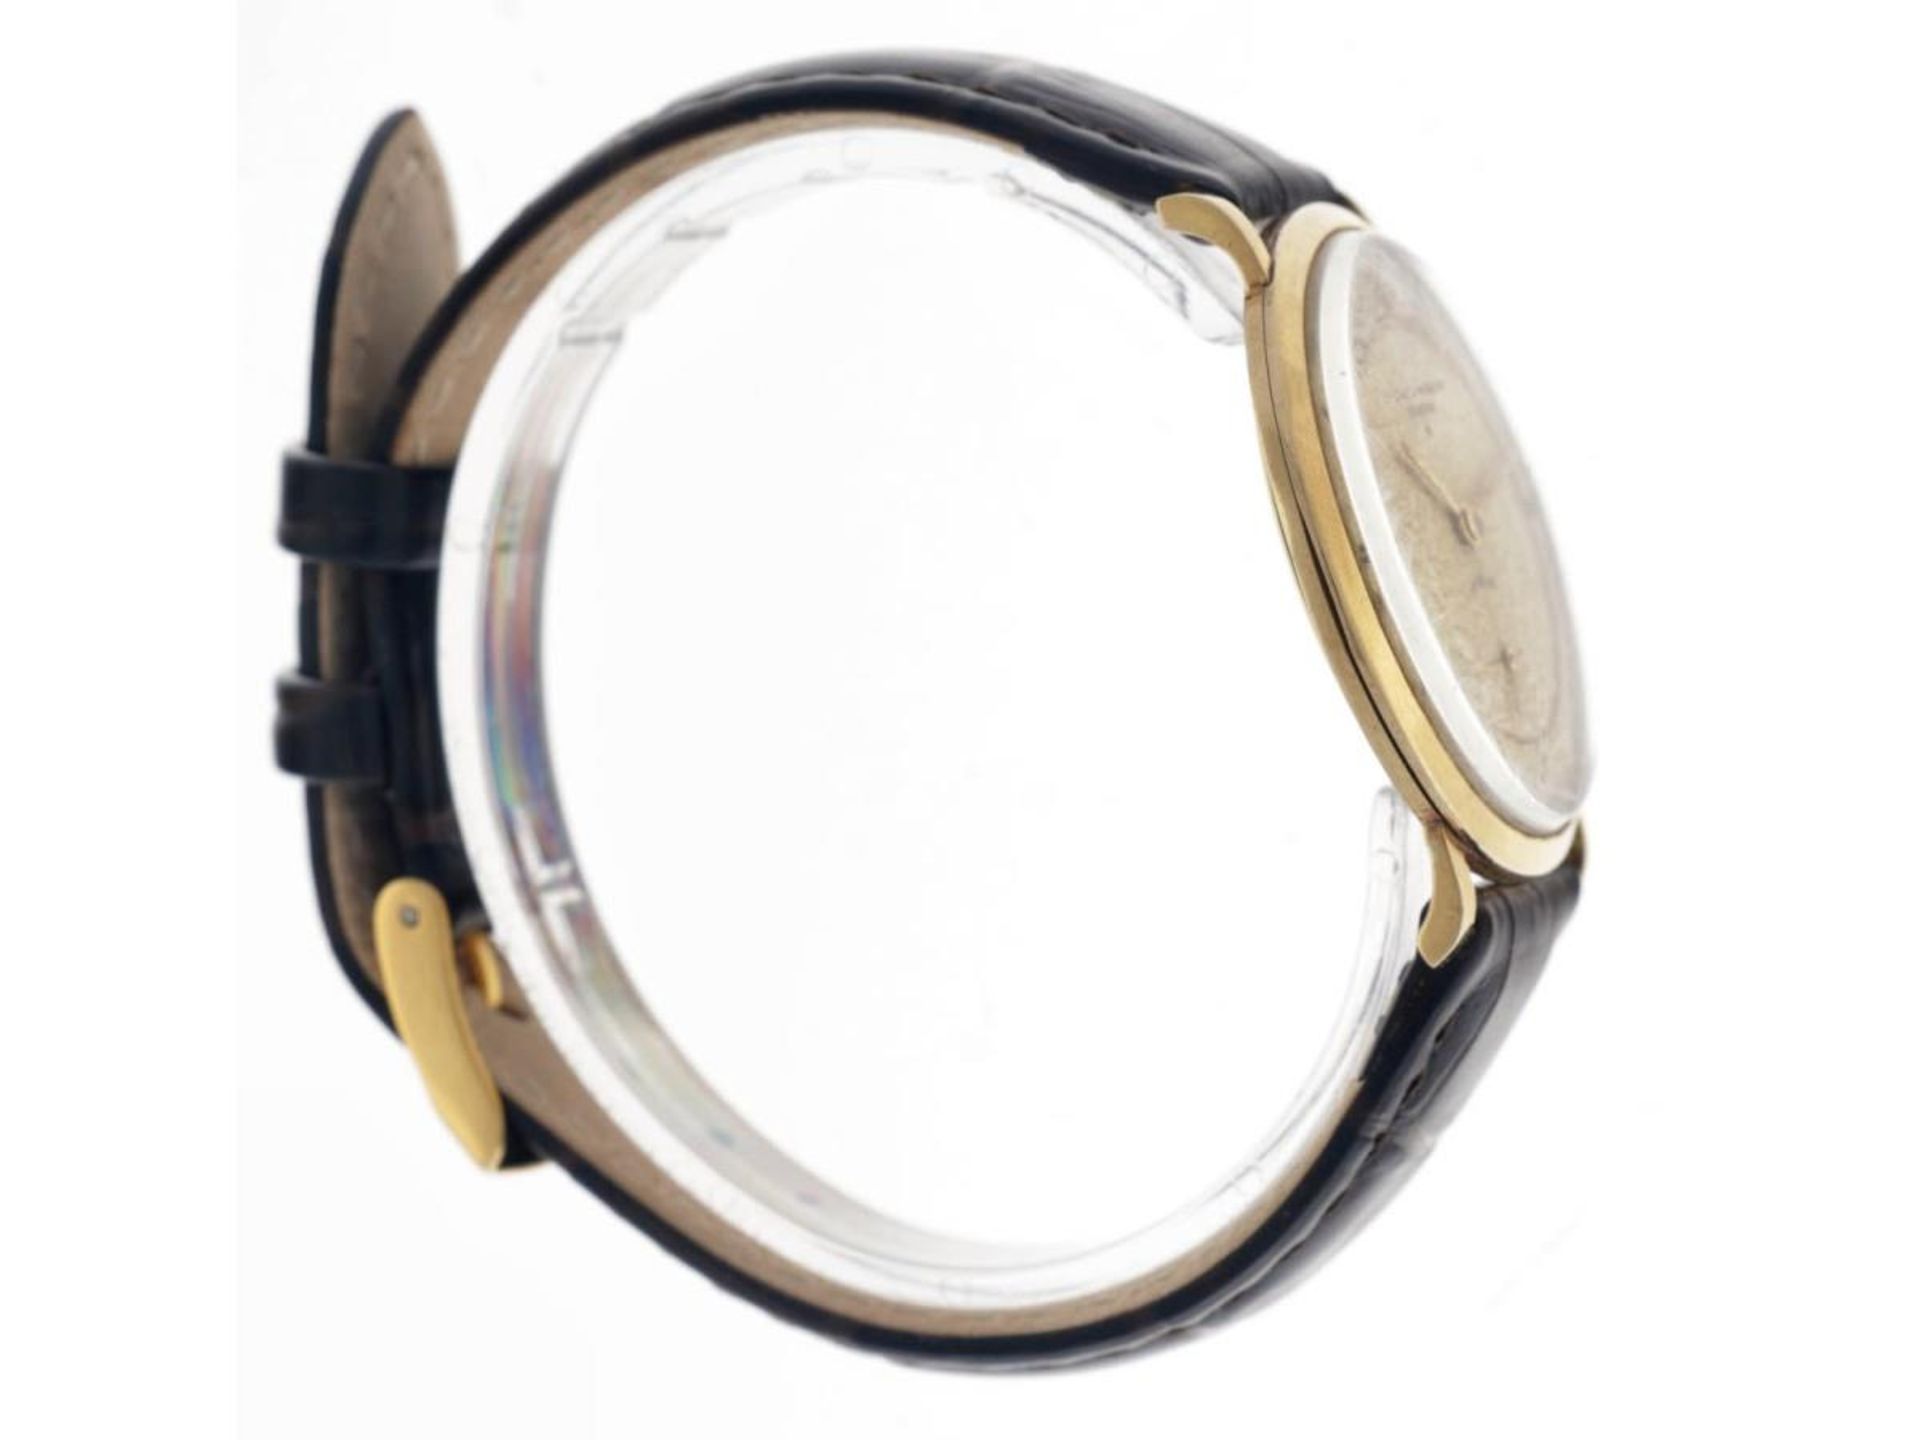 Baume & Mercier vintage 3568 - Men's watch - approx. 1950. - Image 7 of 12